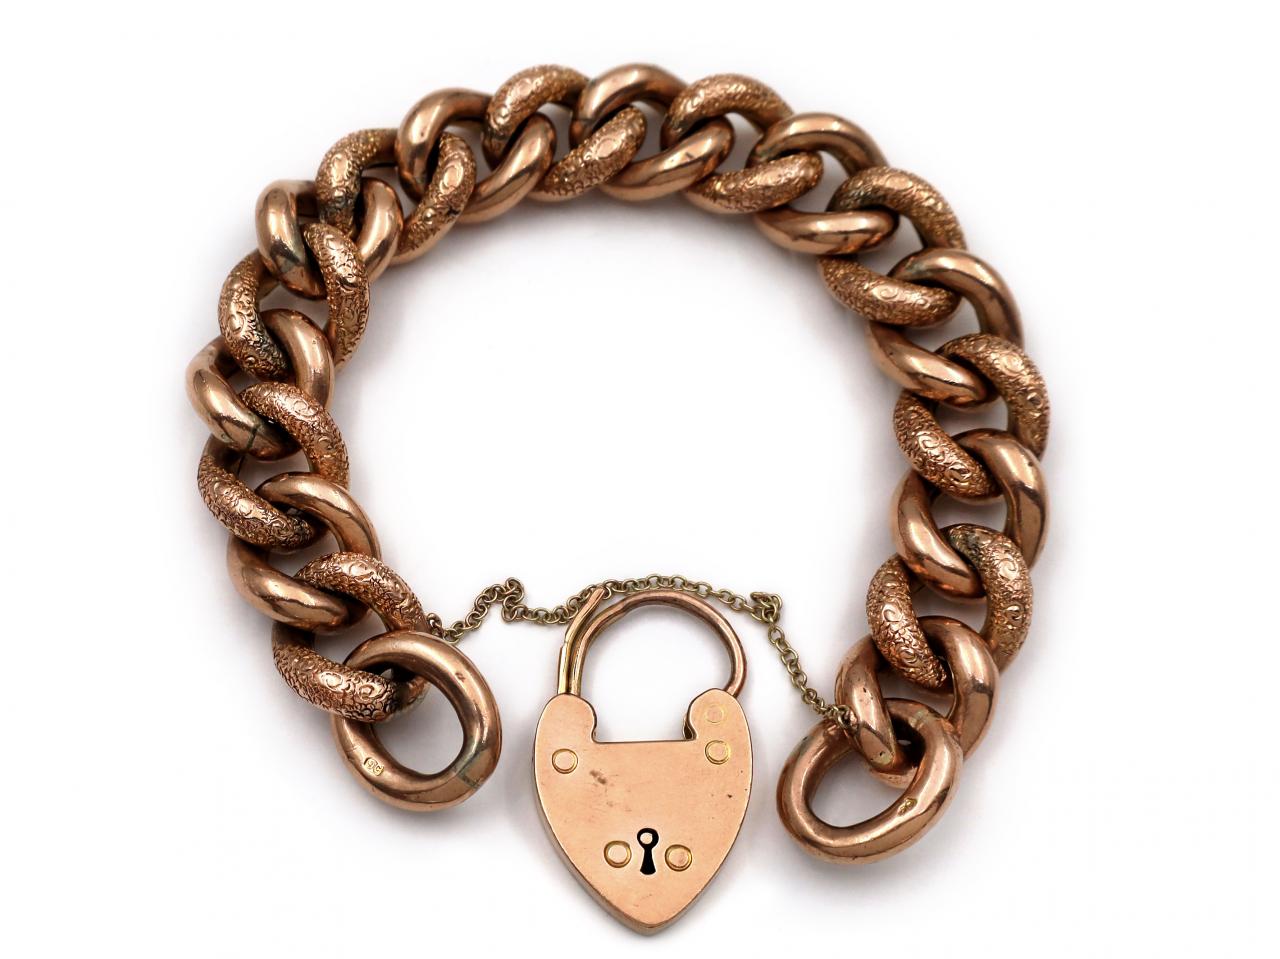 9kt rose gold antique engraved and polished curb bracelet with heart lock